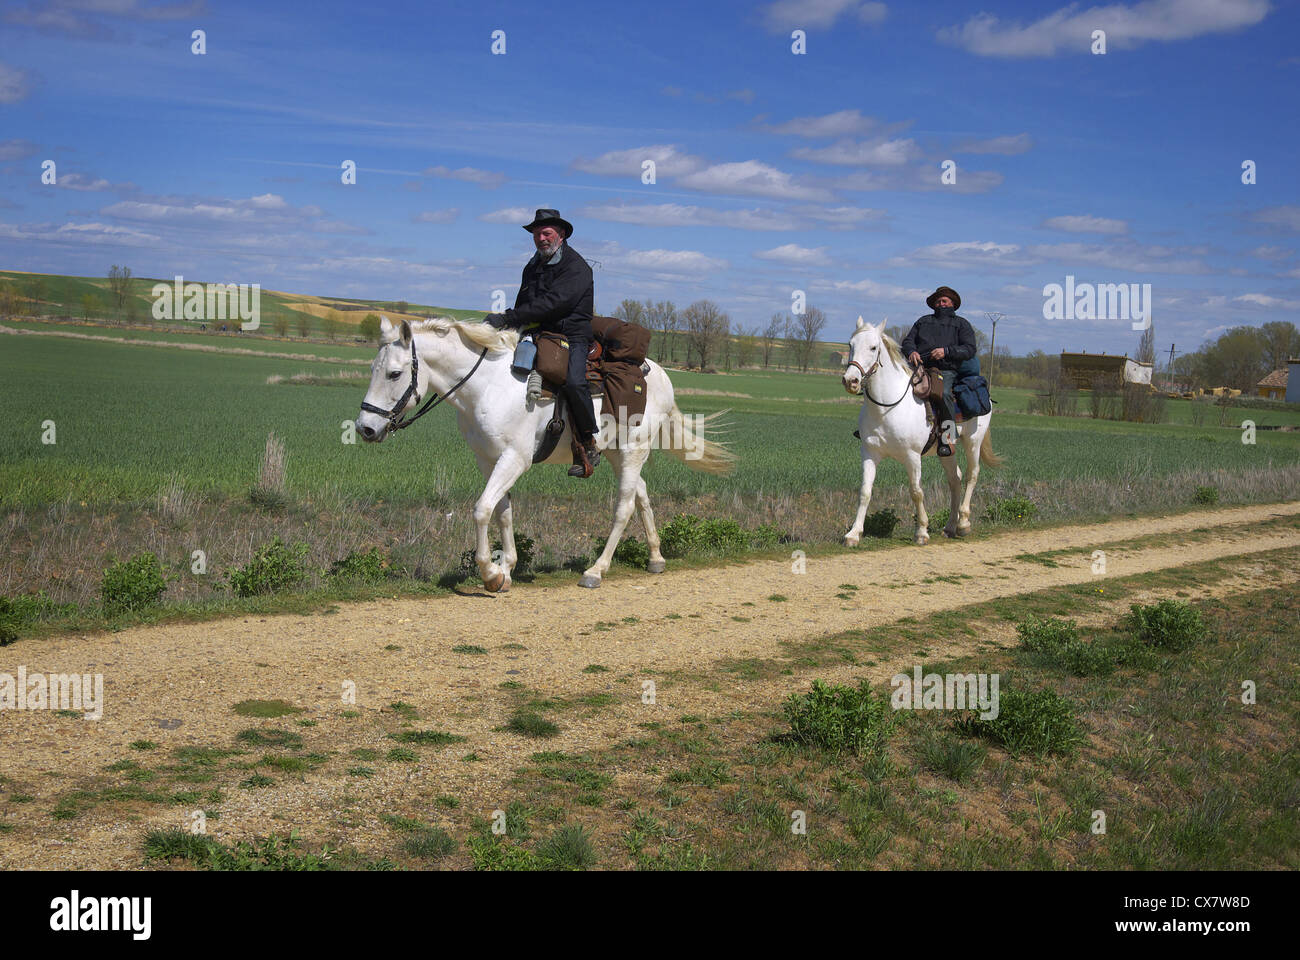 Two pilgrims on horseback en route to Santiago de Compostela, near Fromista, Spain. Stock Photo